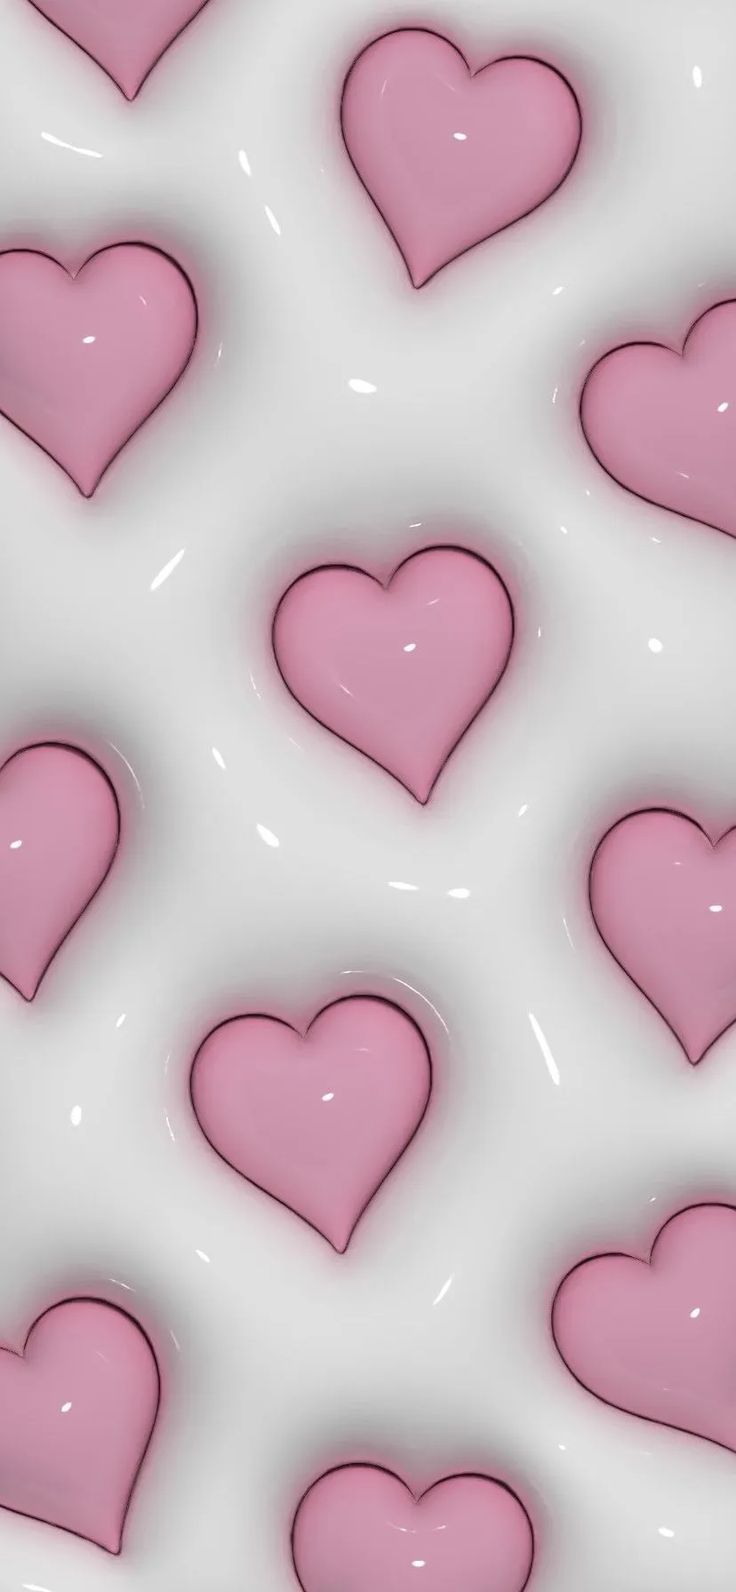  Illustration Hintergrundbild 736x1592. Freebies: 80 Really Cute 3D Aesthetic Wallpaper For Your Phone!. Heart iphone wallpaper, Pink wallpaper iphone, Jelly wallpaper